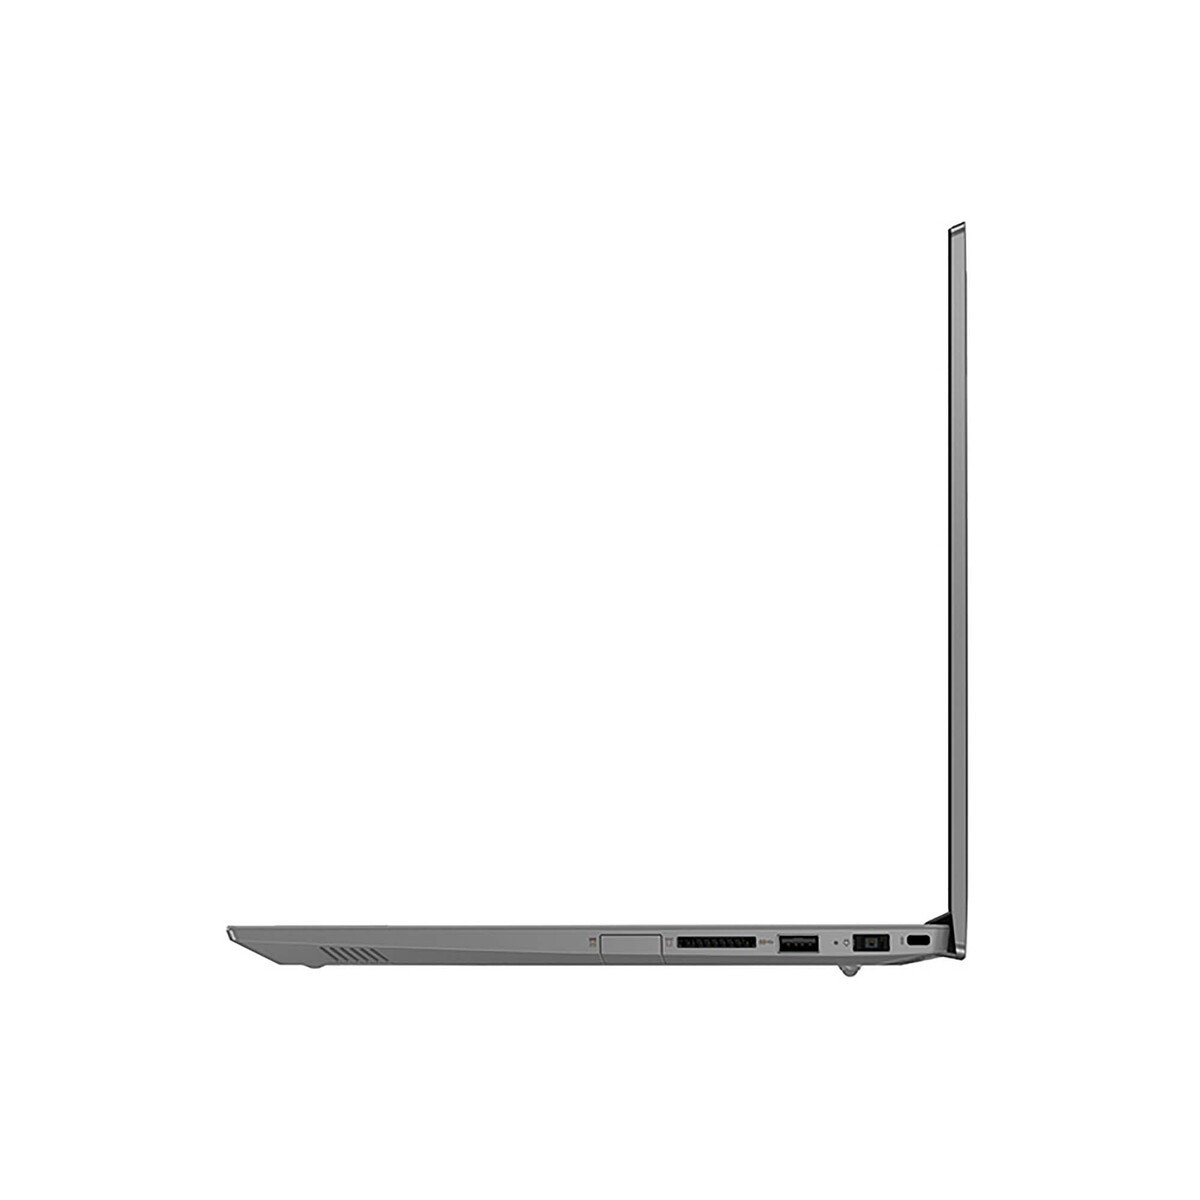 Lenovo ThinkBook 15-20SM001EAX Intel Core i7-1065G7, 8GB RAM, 512GB SSD, Intel Iris Plus Graphics, 15.6 inch Screen, Windows 10 Pro, Mineral Grey